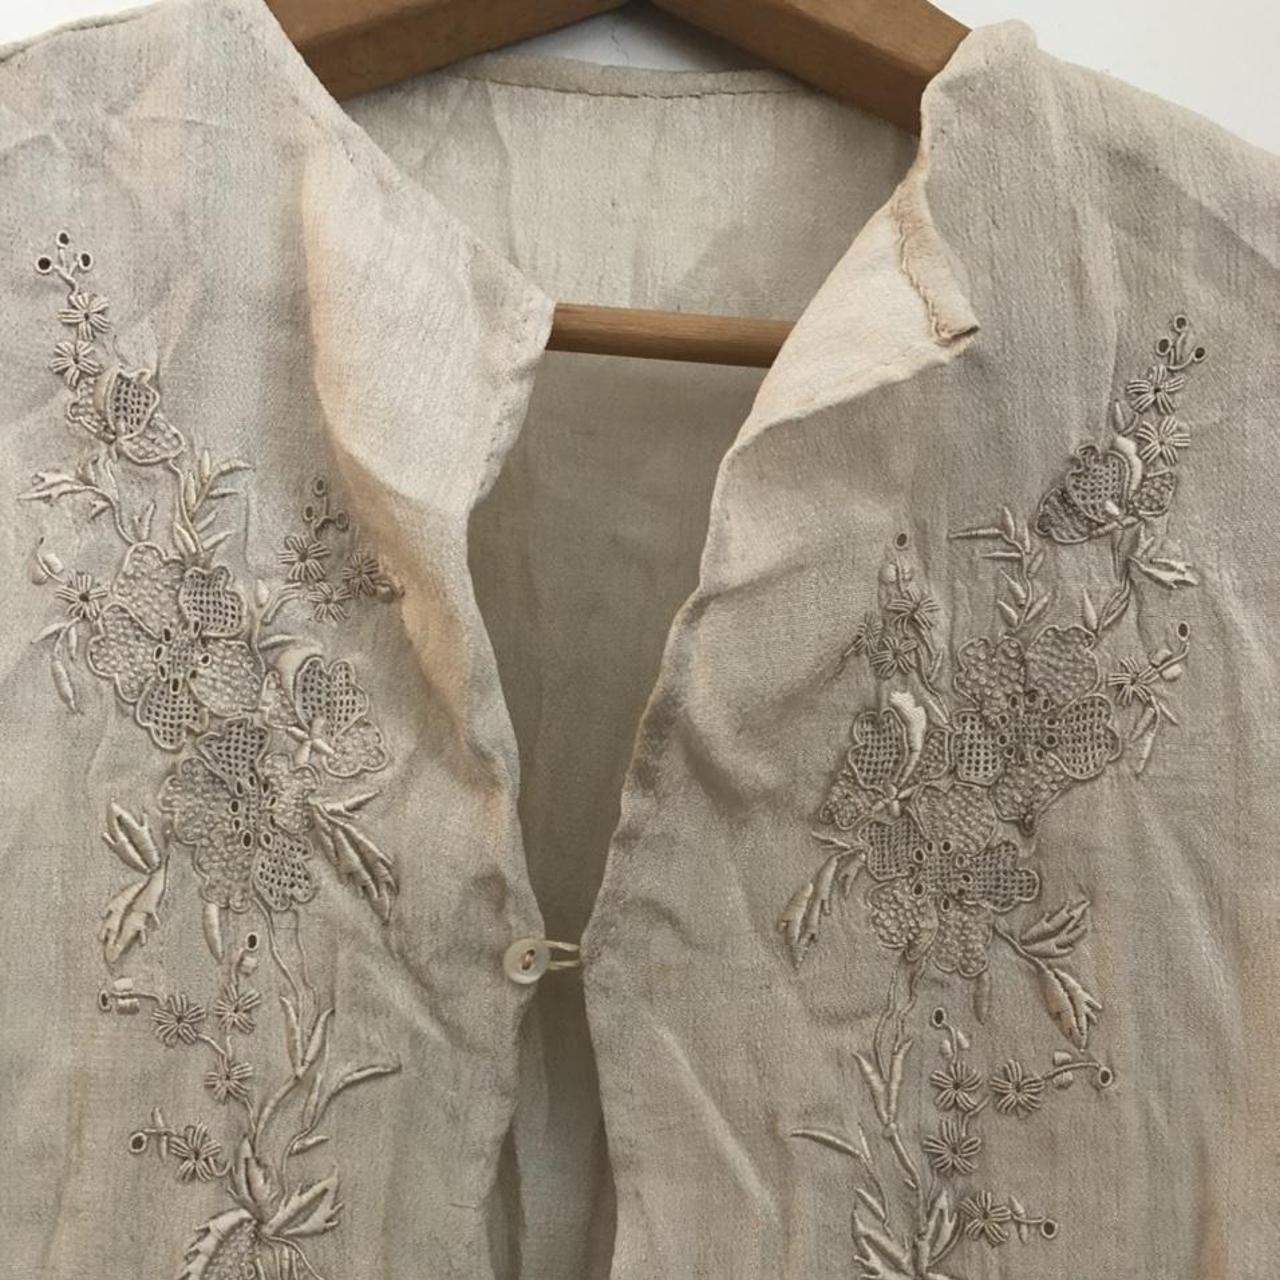 Sweet handmade antique silk vest/blouse with... - Depop